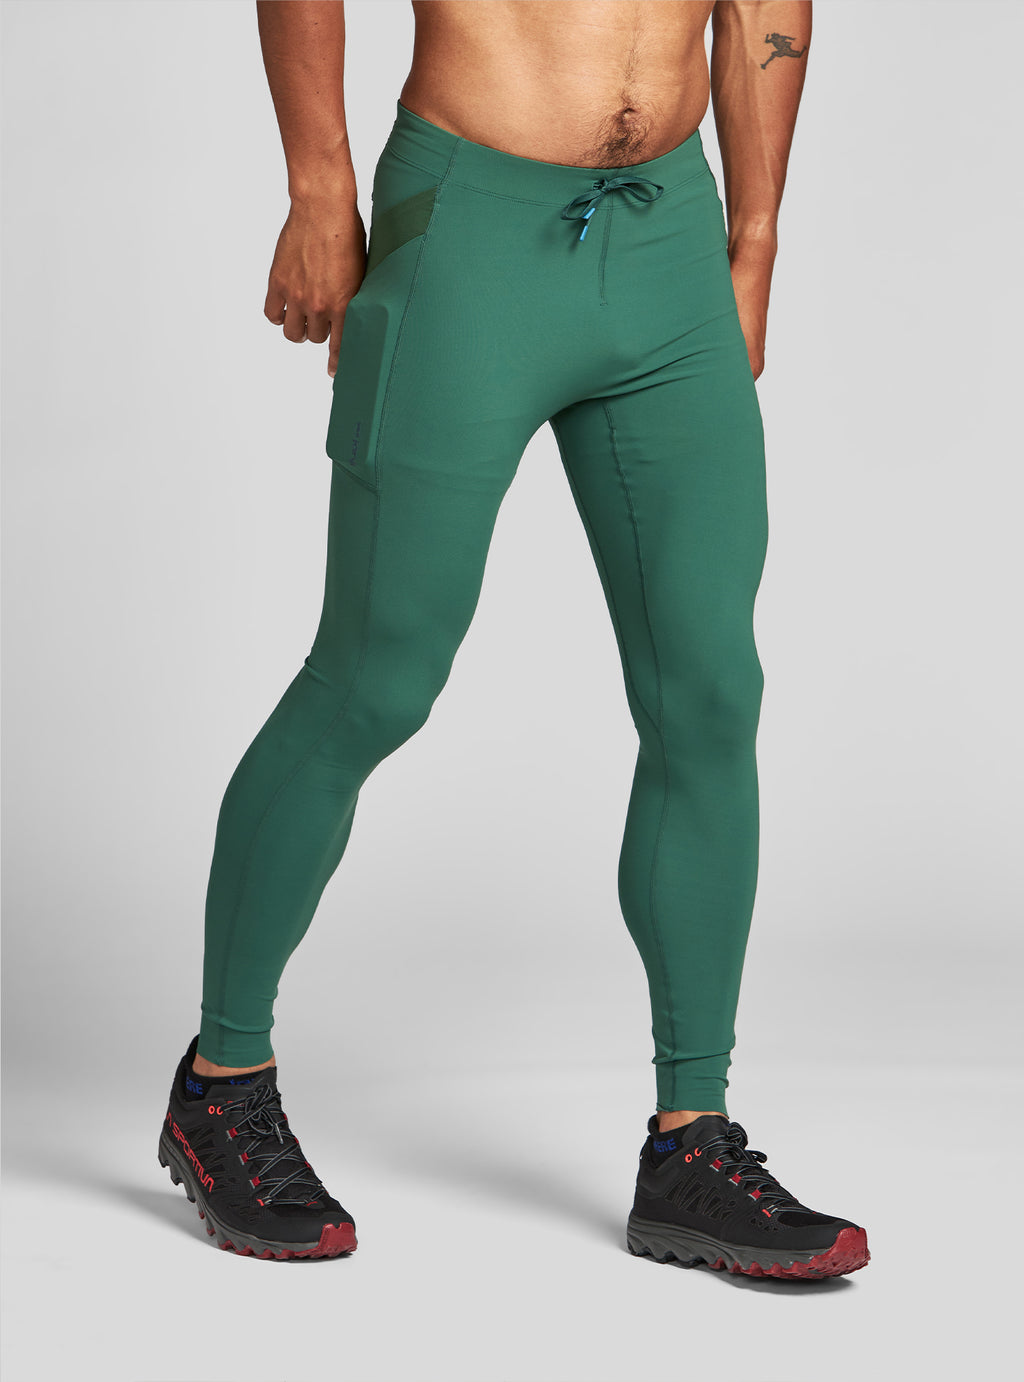 Nike Utility Tight - Men's - Clothing